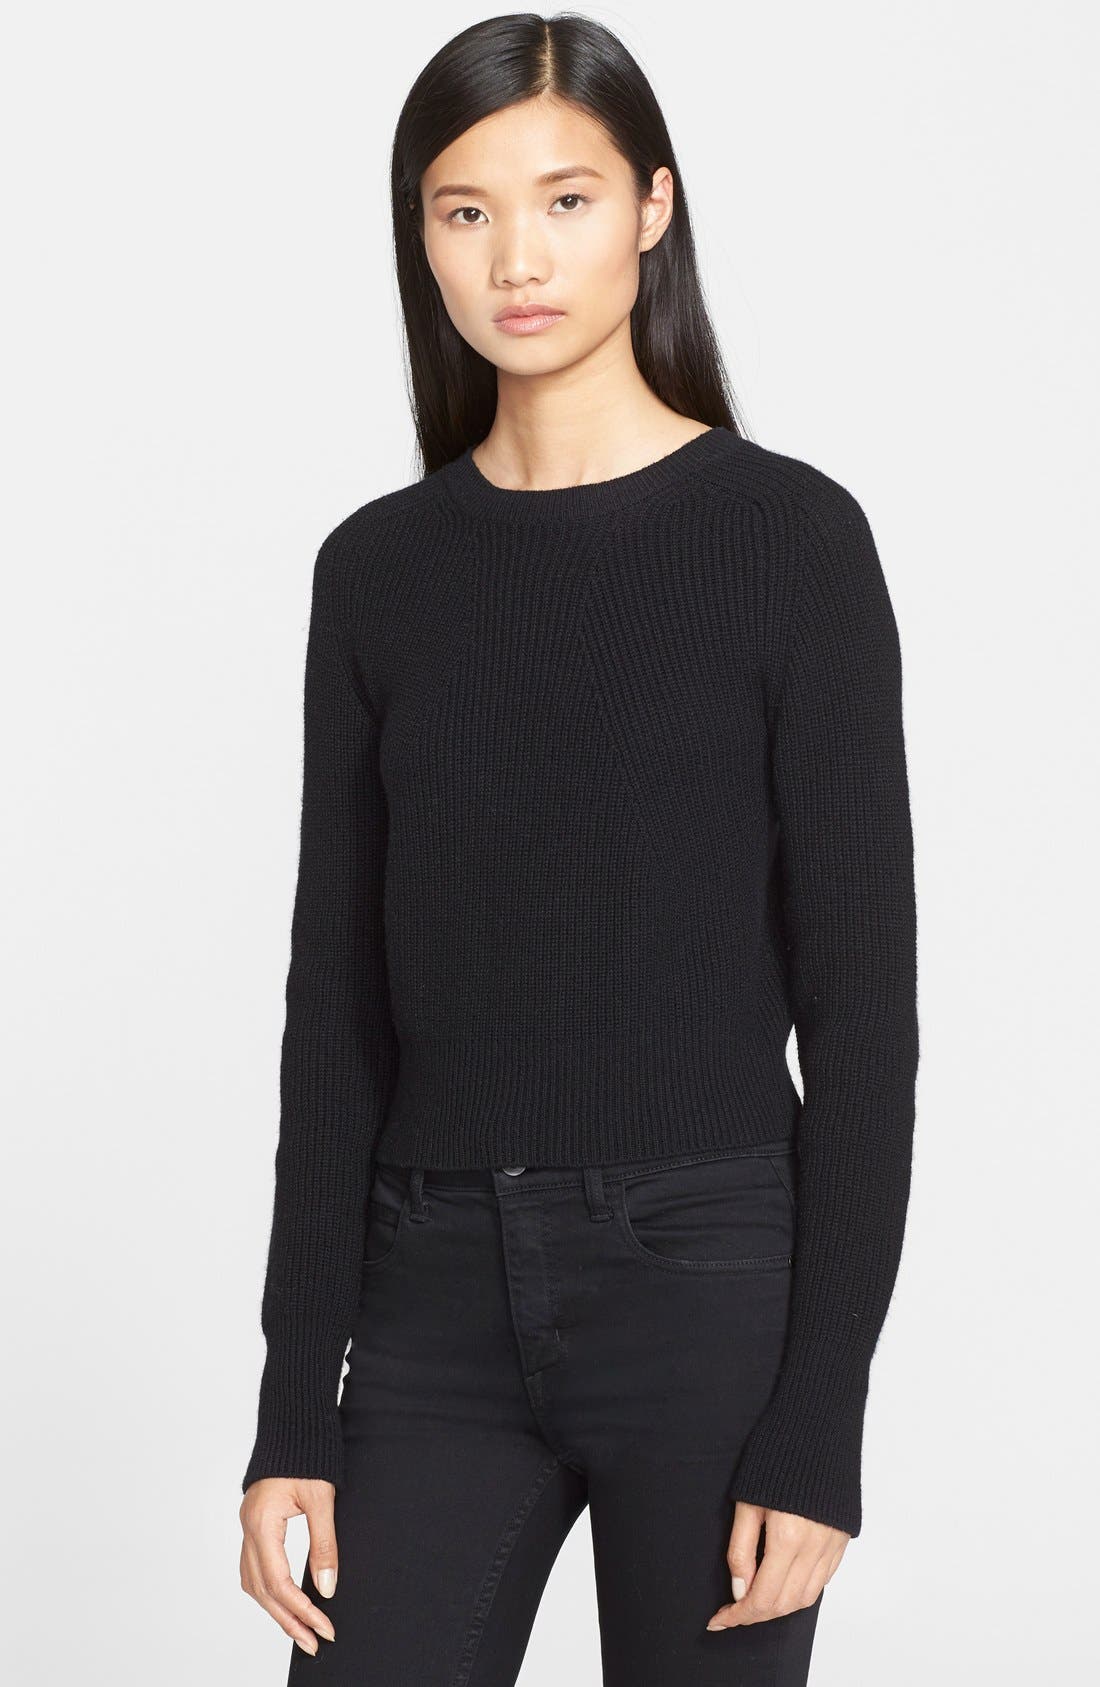 helmut lang black sweater